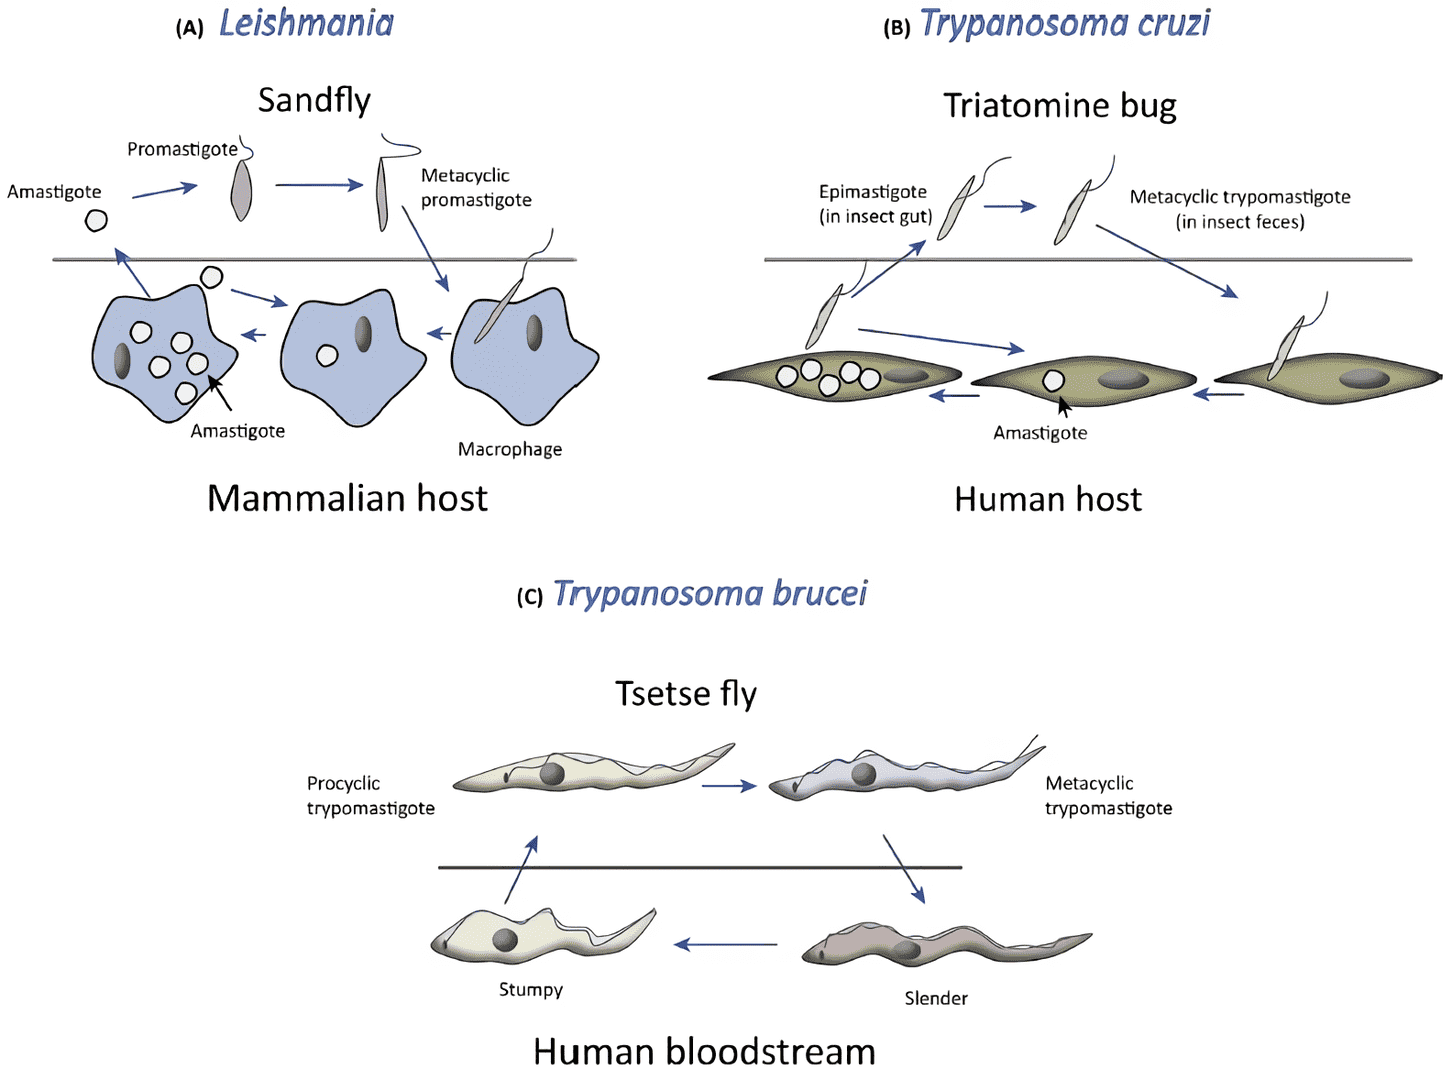 Life cycles of Leishmania spp., Trypanosoma cruzi, and Trypanosoma brucei.